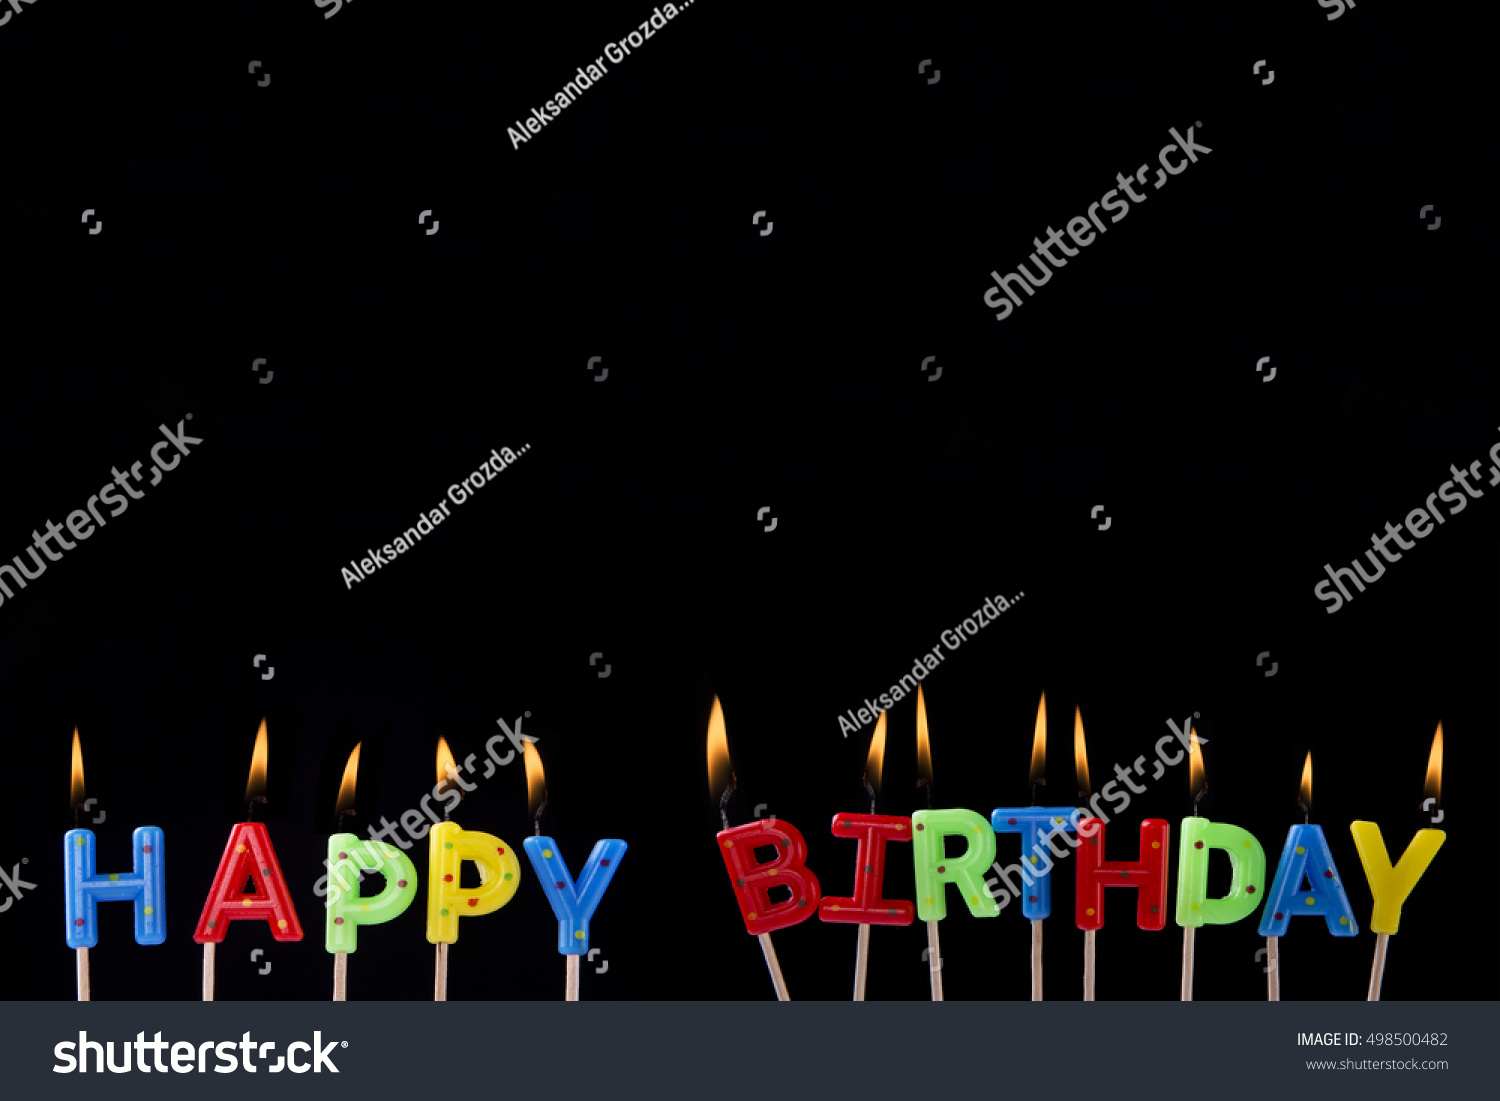 Happy Birthday Candles On Black Background Stock Photo 498500482 ...